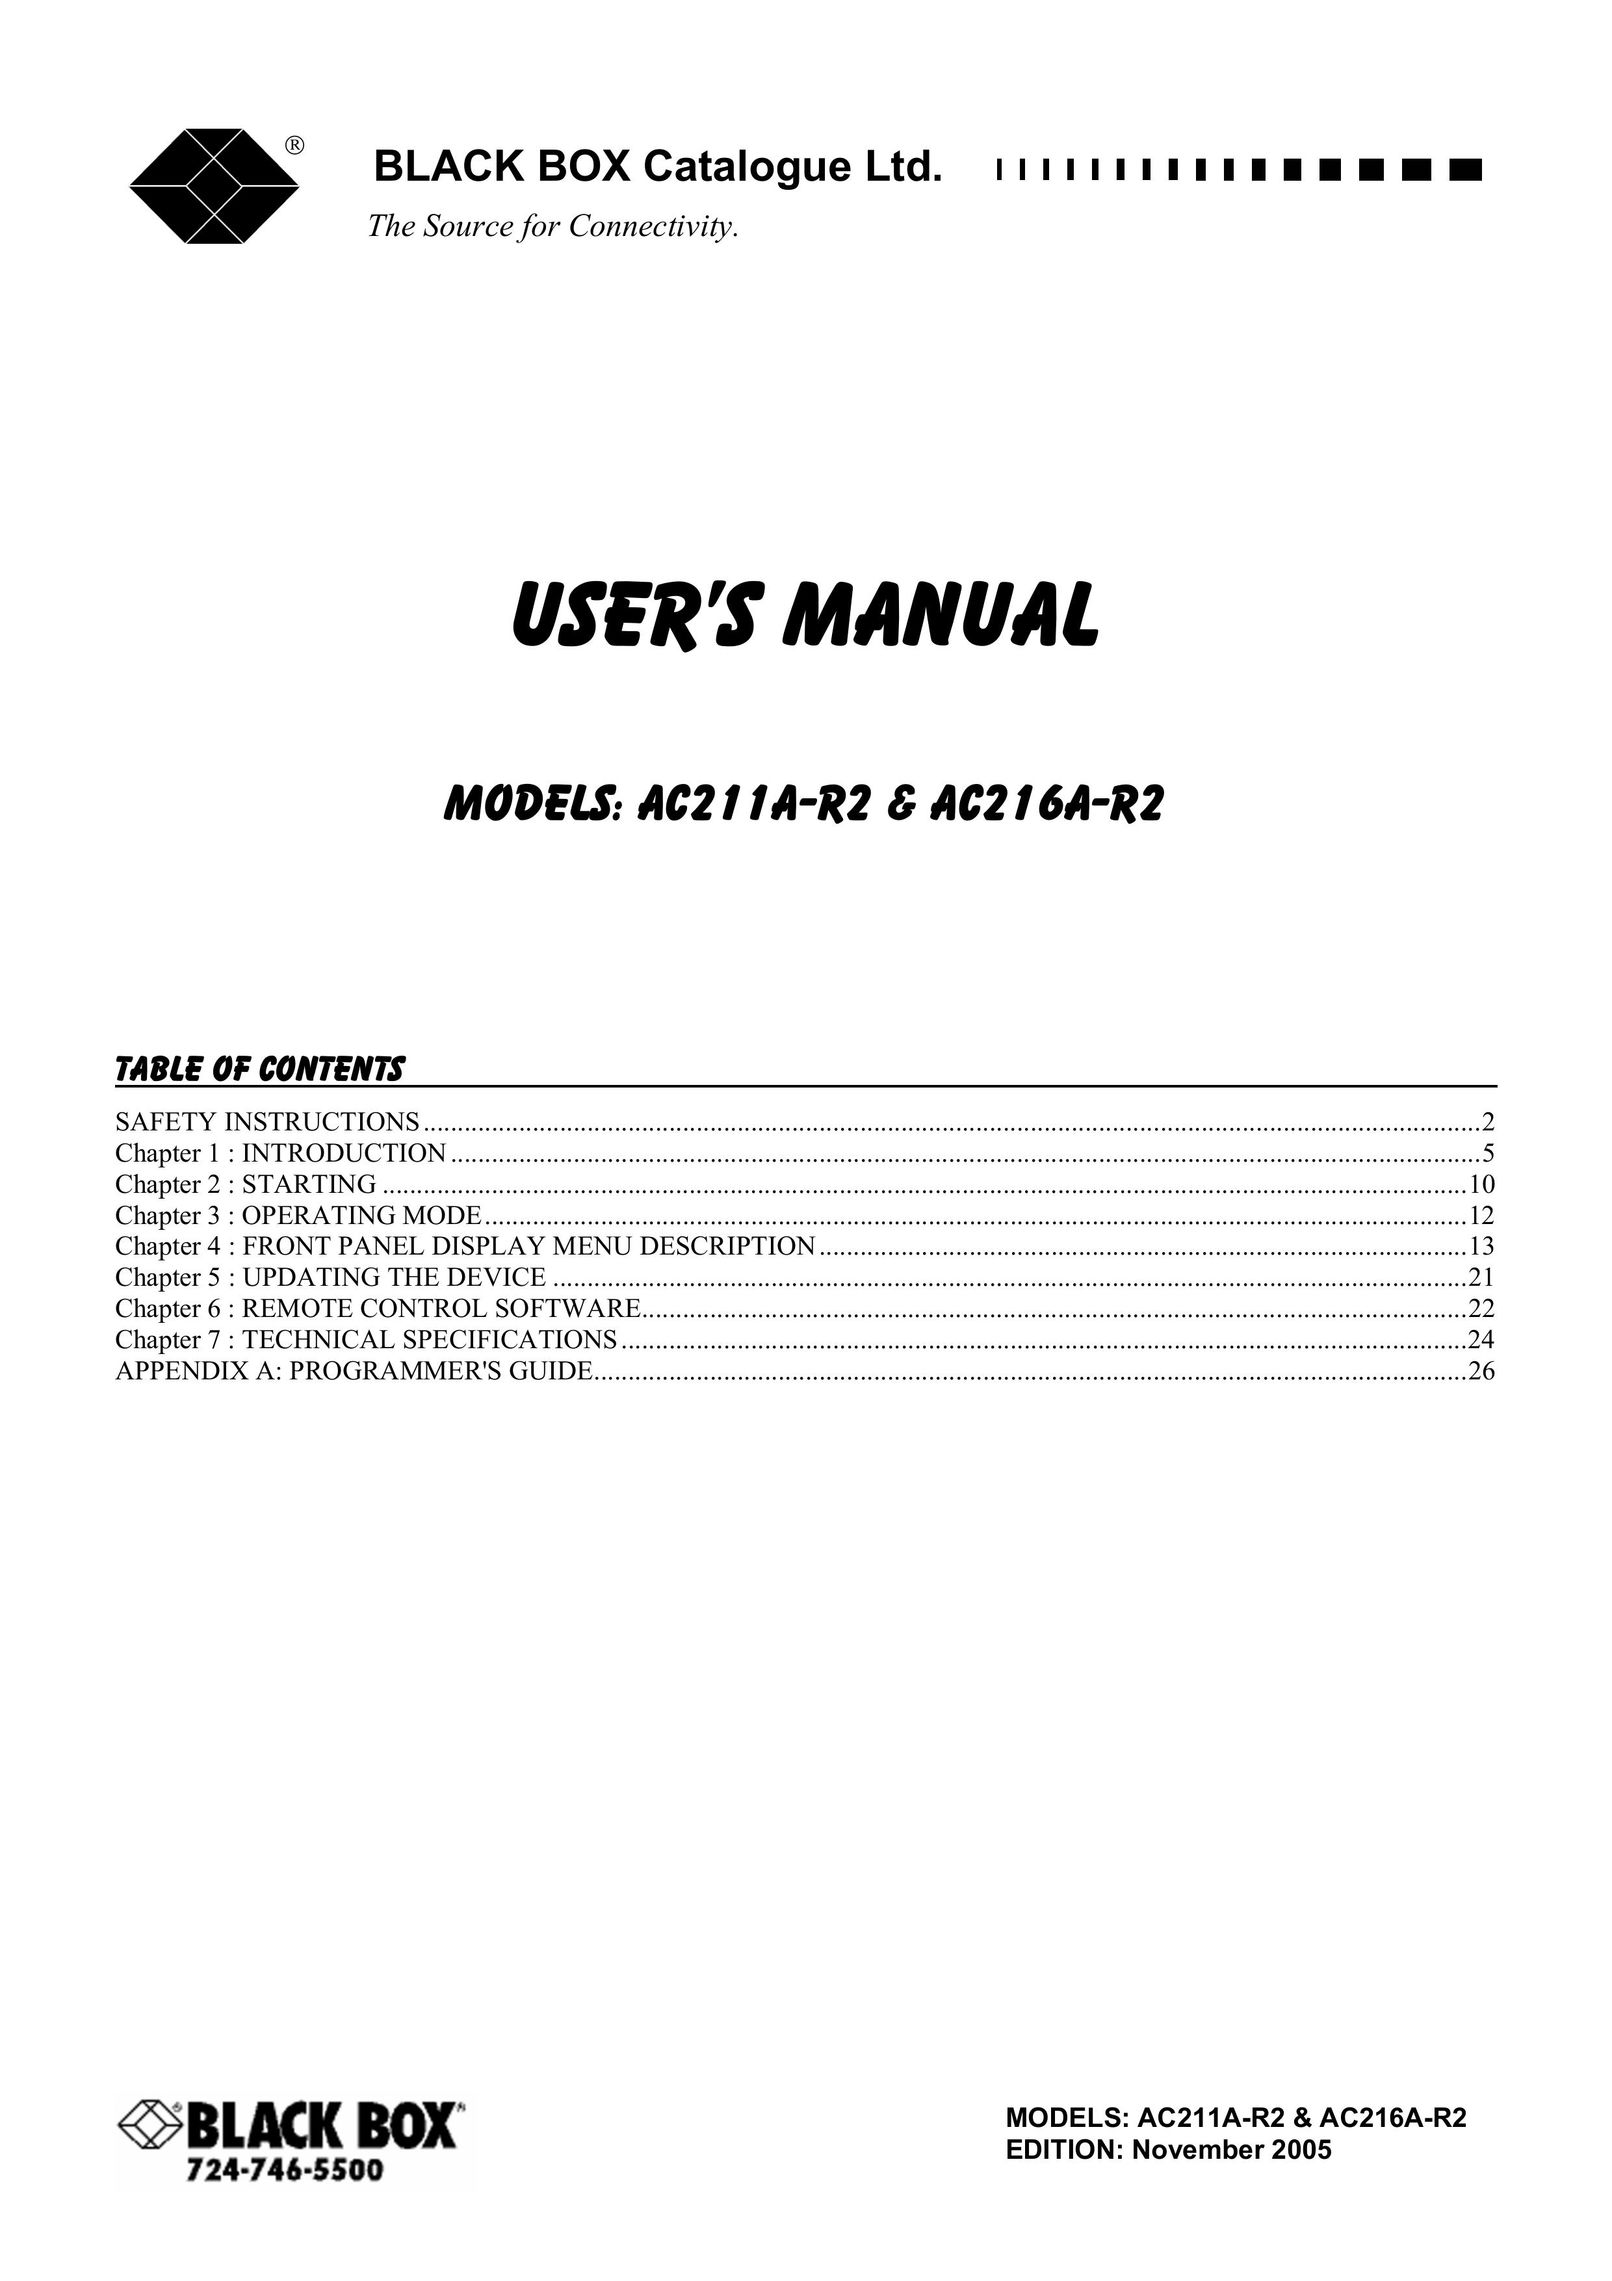 Black Box AC216A-R2 Cable Box User Manual